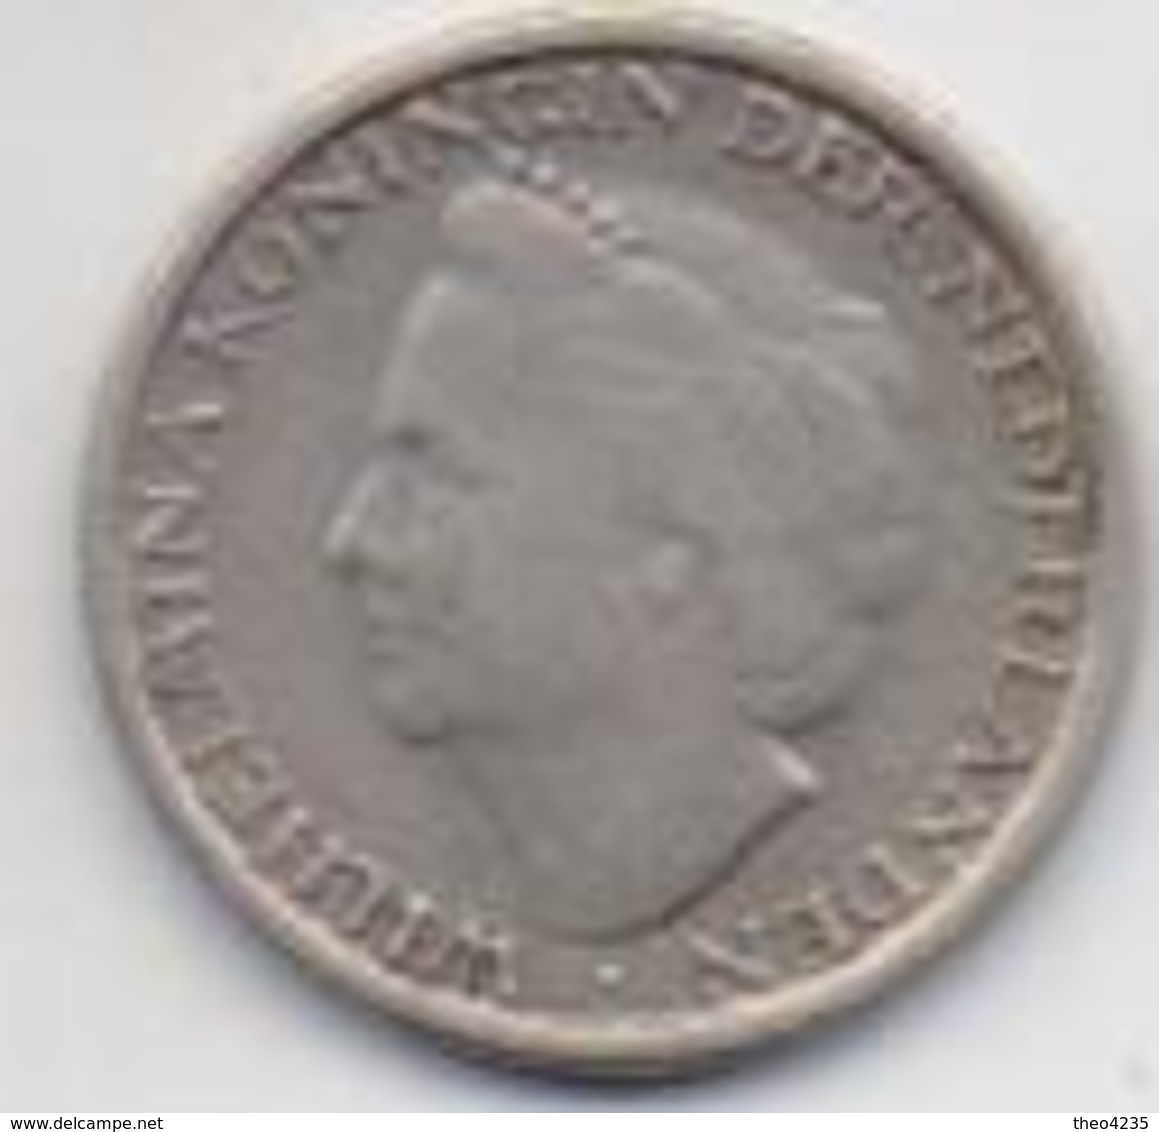 NETHERLAND ANTILEES SILVER COINS 1/10 GULDEN -1959 & 1948-USED AS SCAN(Kbx) - Netherlands Antilles